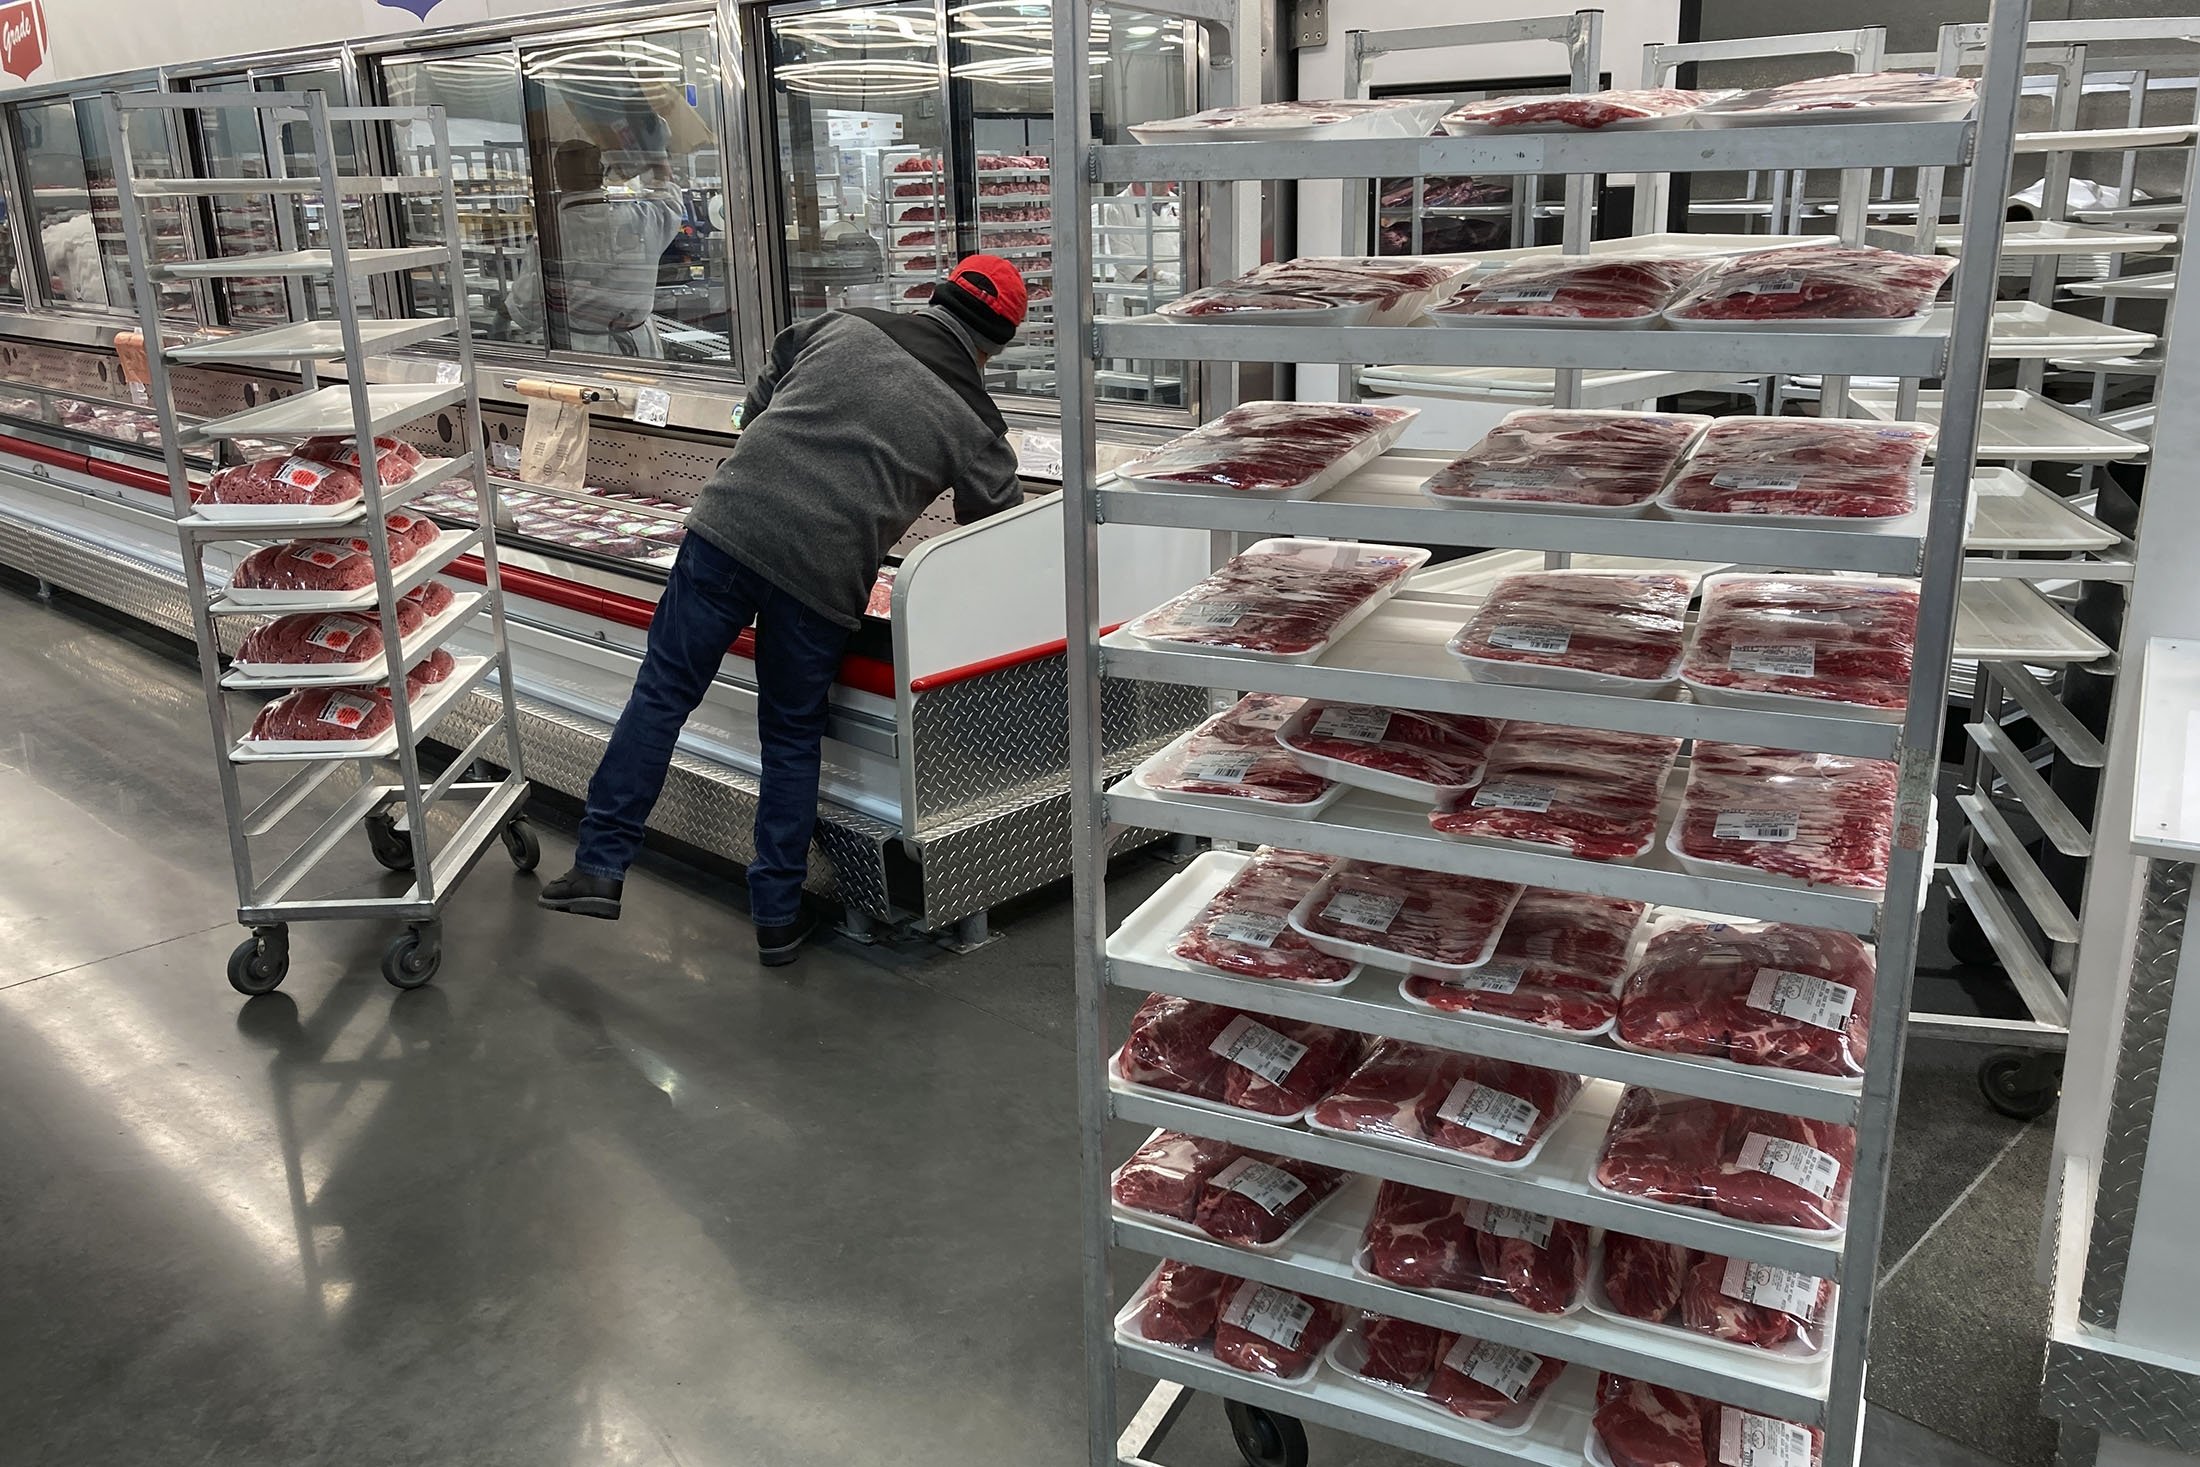 An employee restocks meat, in North Miami, Florida, U.S., Jan. 17, 2023. (AP Photo)